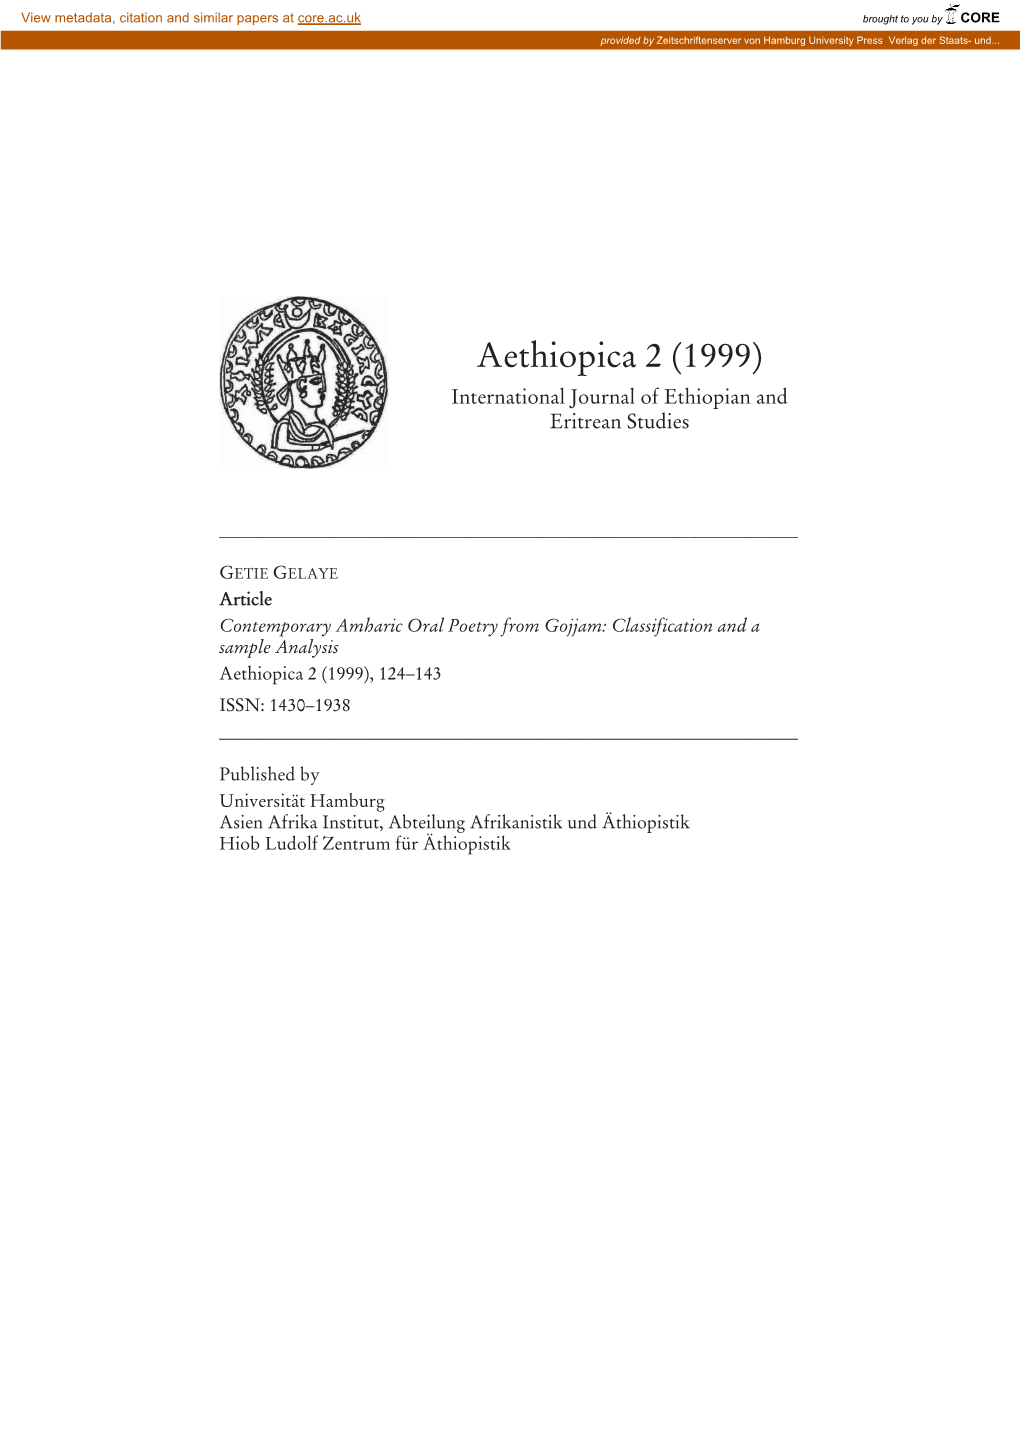 Aethiopica 2 (1999) International Journal of Ethiopian and Eritrean Studies